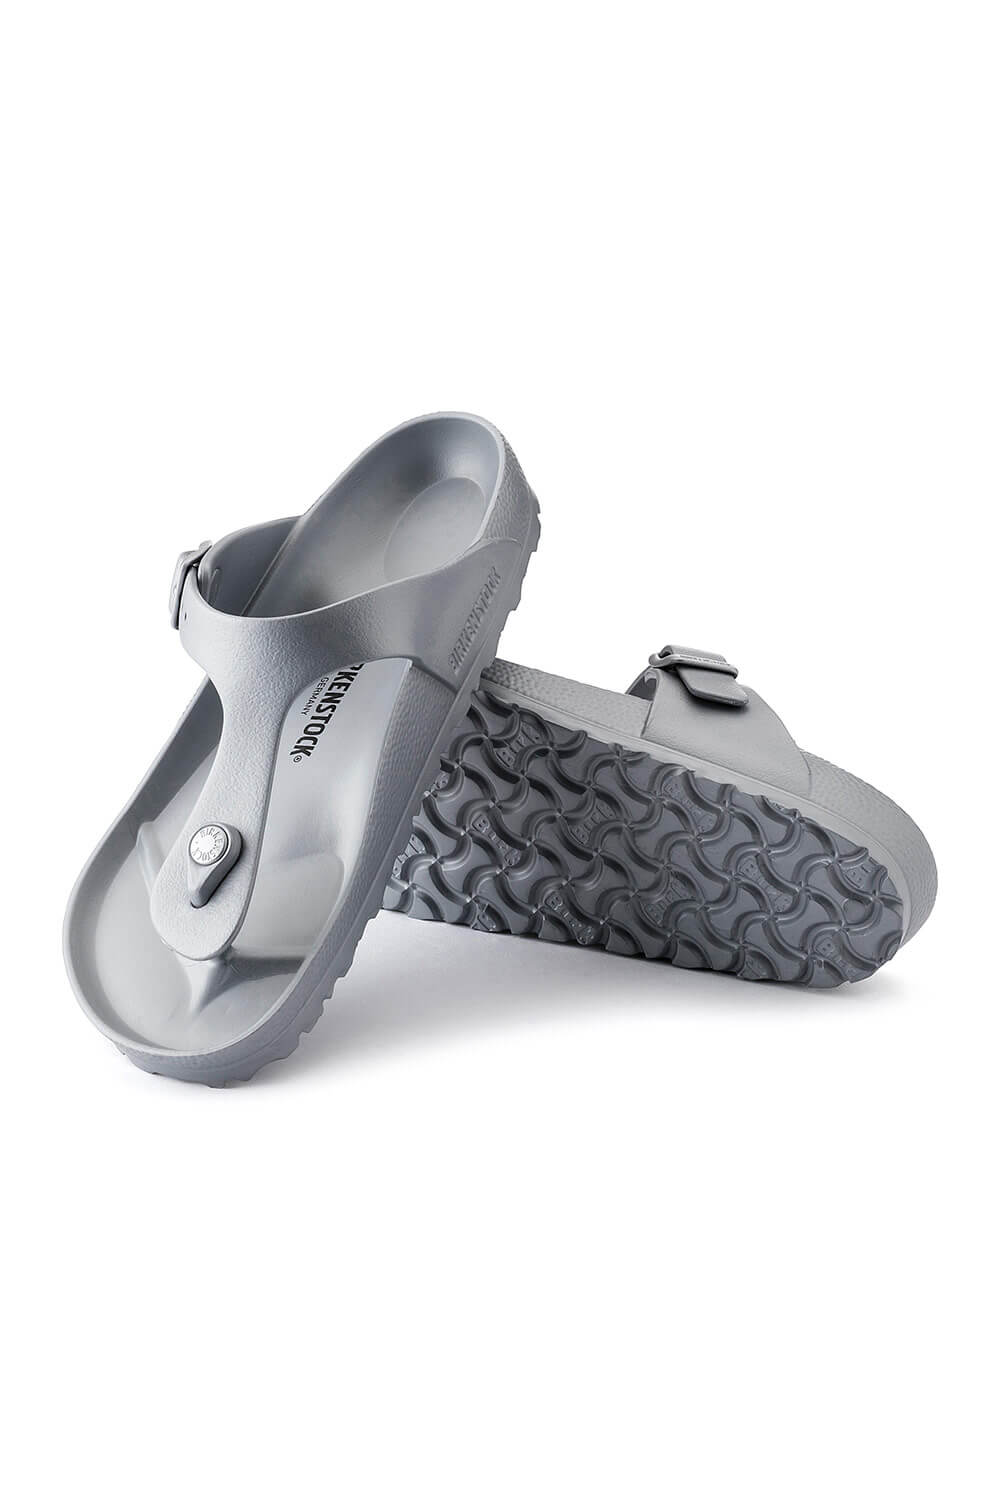 Birkenstock Gizeh EVA Sandals for Women in Metallic Silver